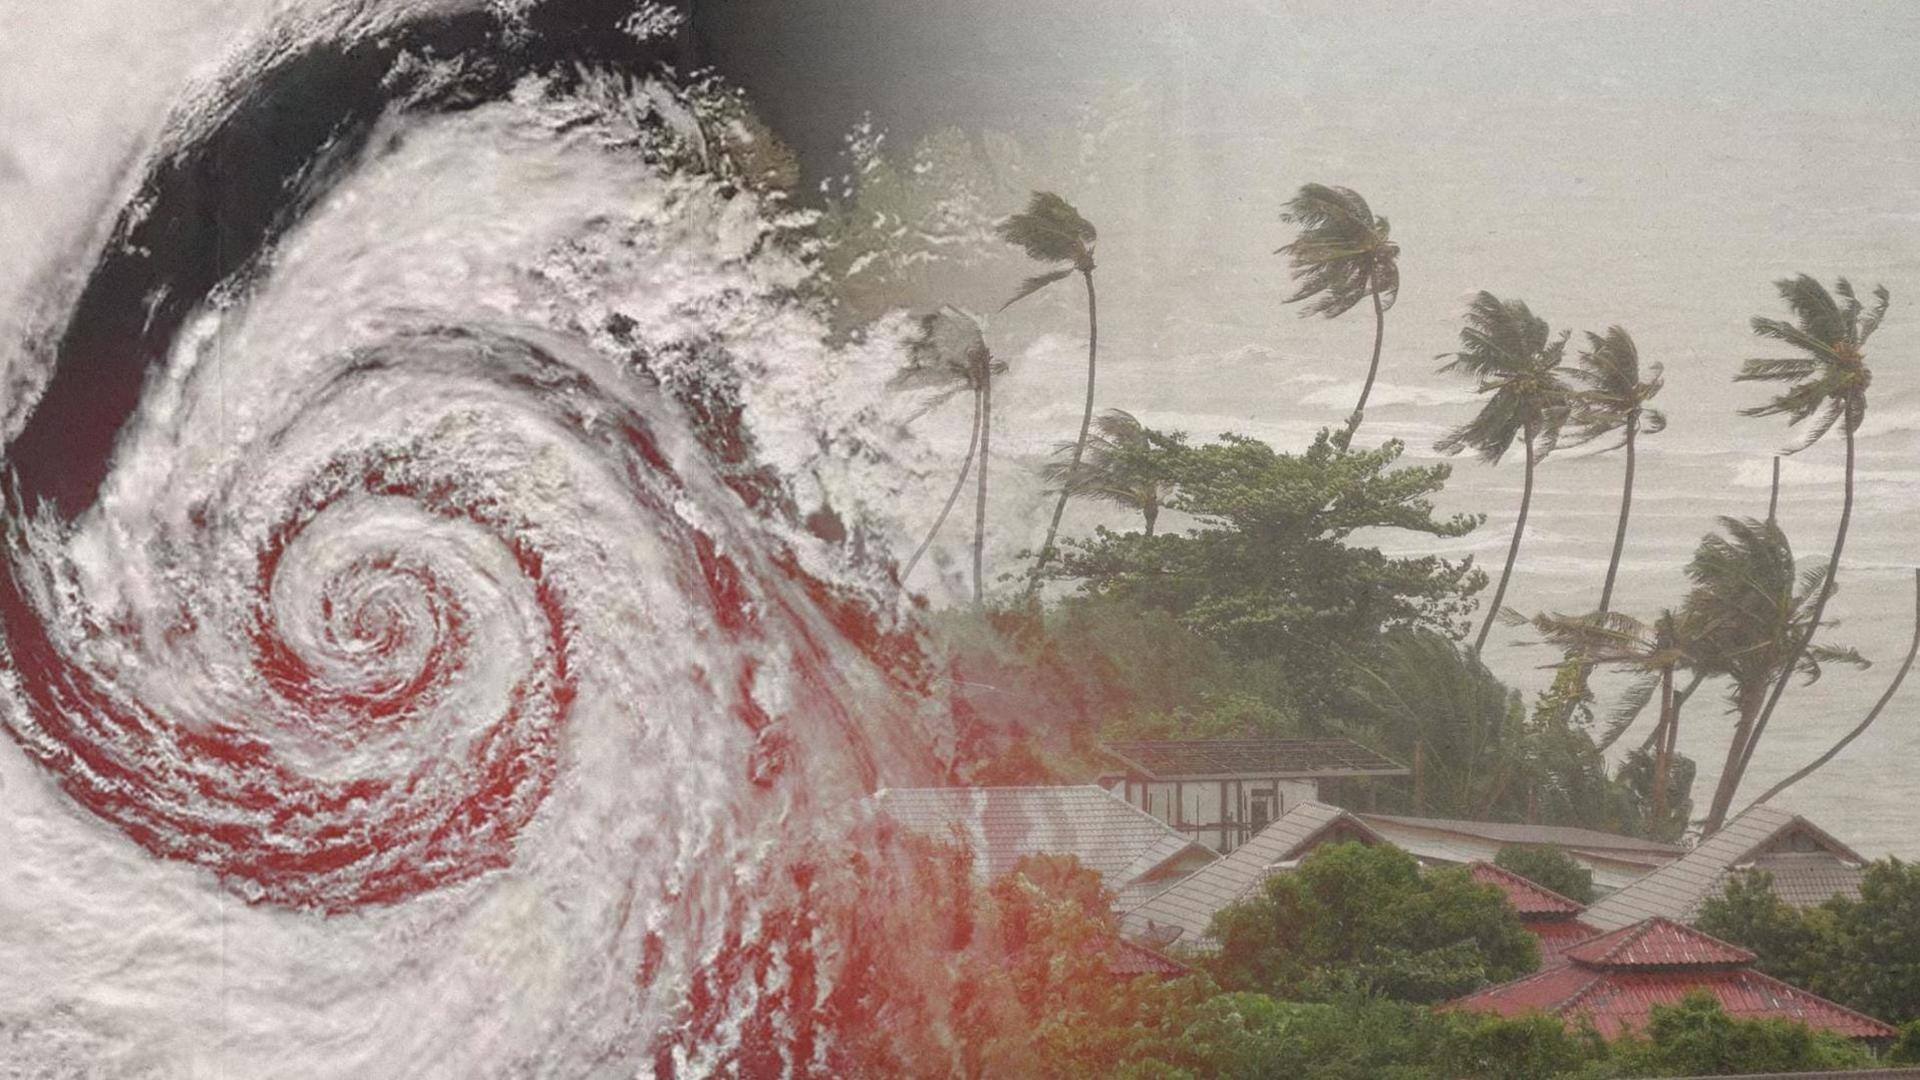 Cyclone Mocha intensifies, headed toward Bay of Bengal coasts: IMD